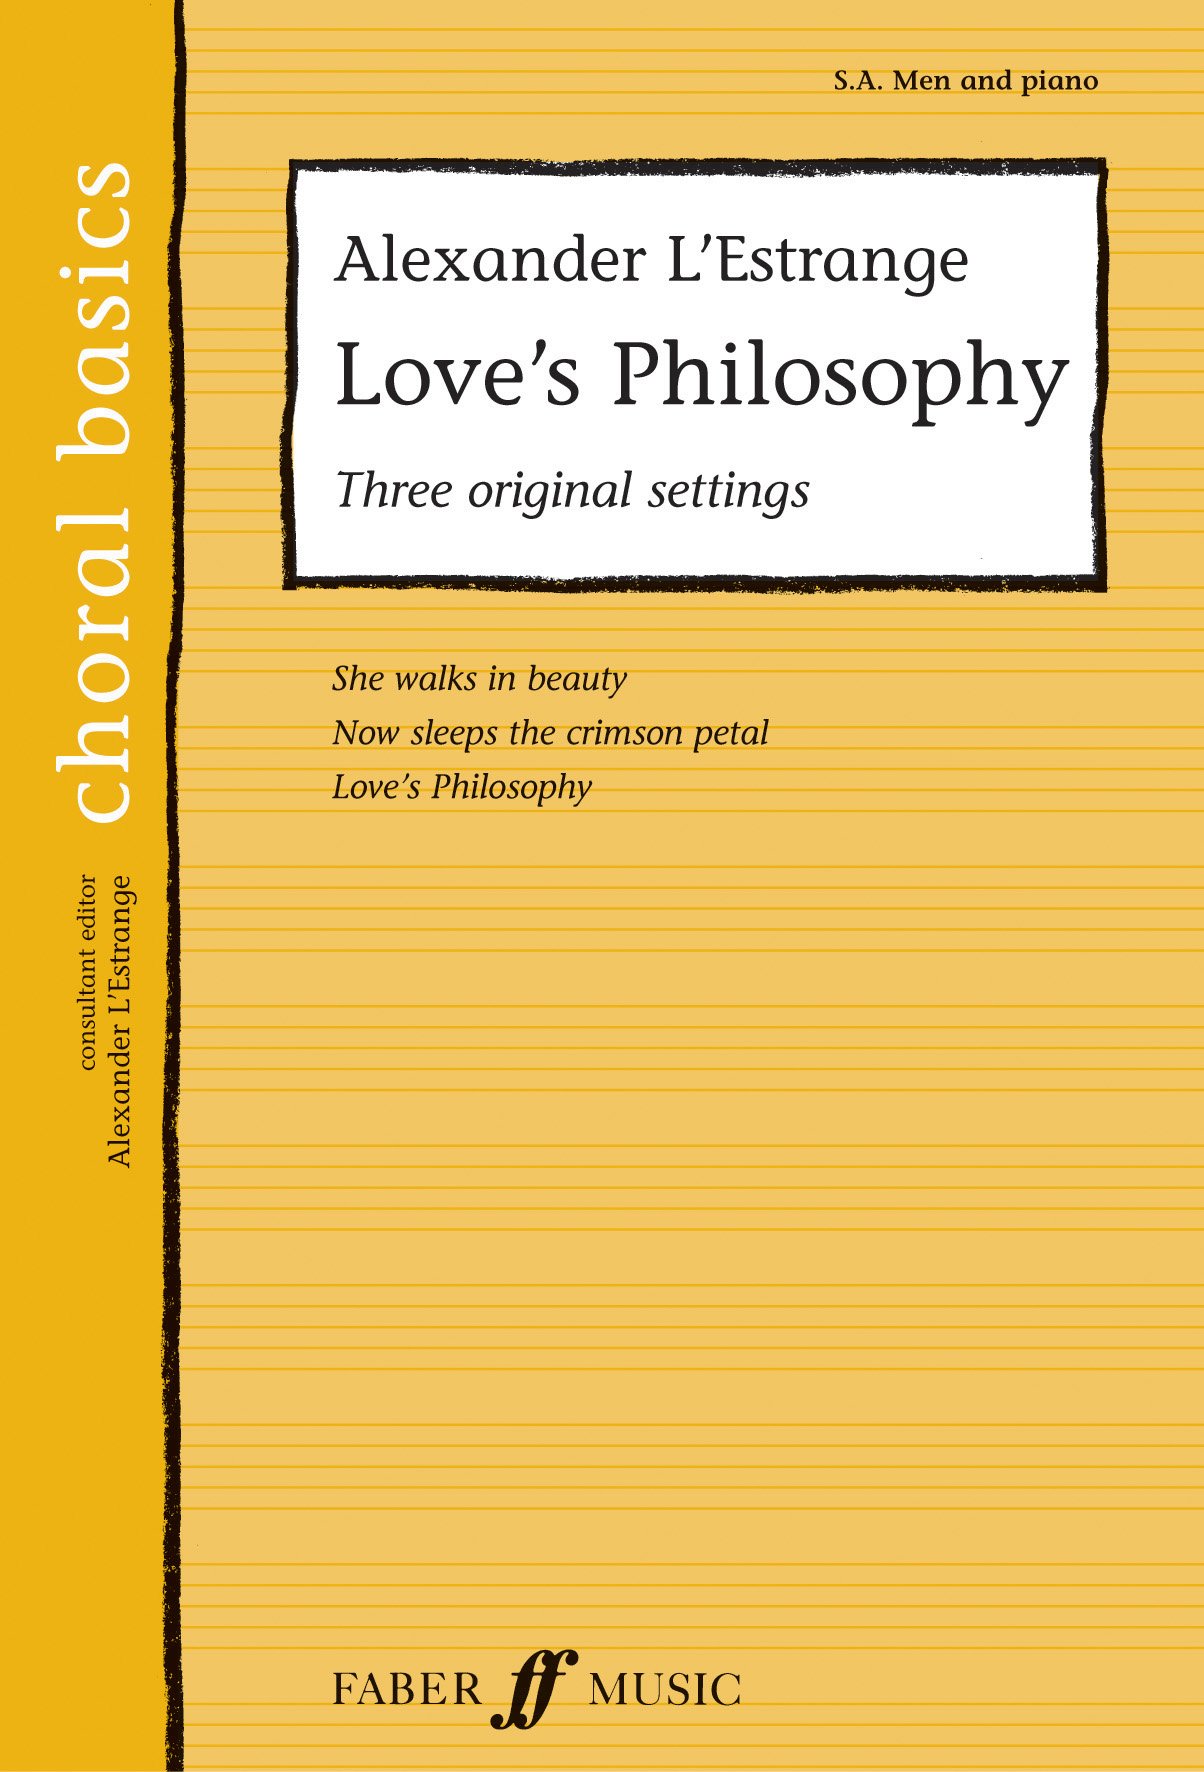 Love's Philosophy SAMen + piano COVER.jpg